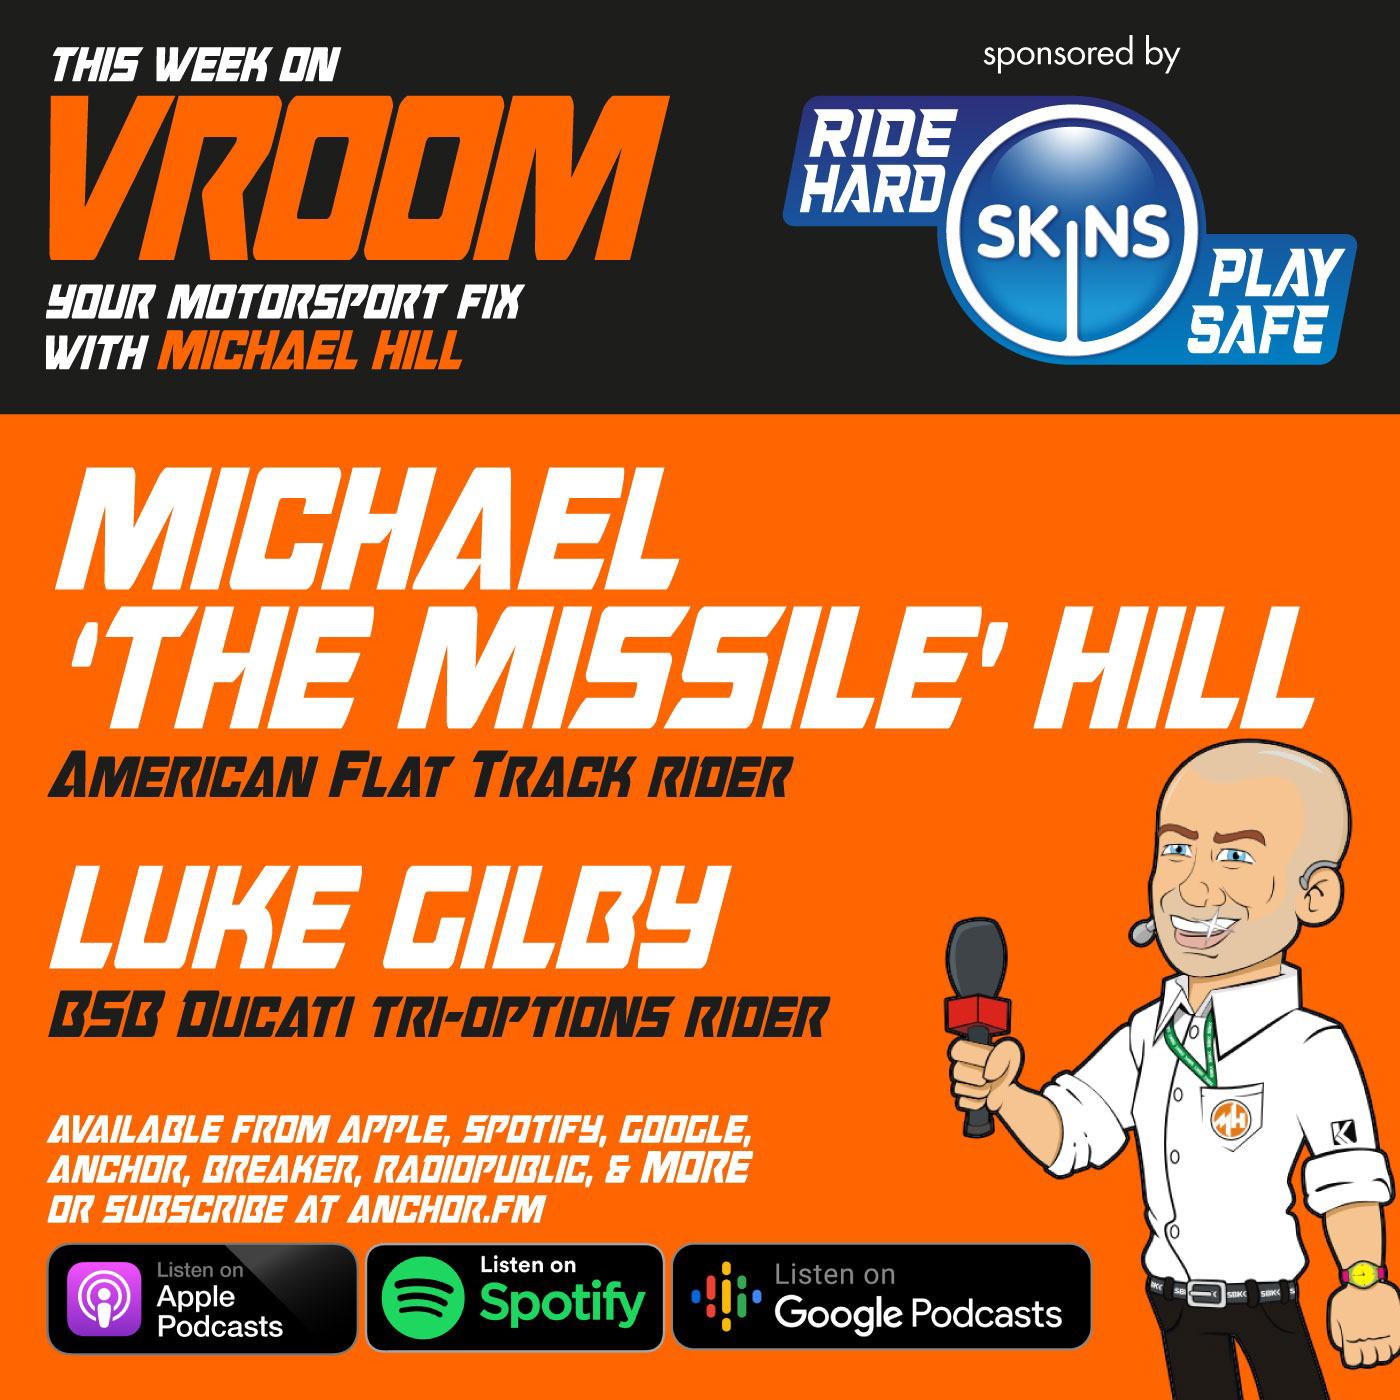 Vroom – Your Motorsport Fix, Episode 55 – Michael ‘the Missile’ Hill, Luke Gilby